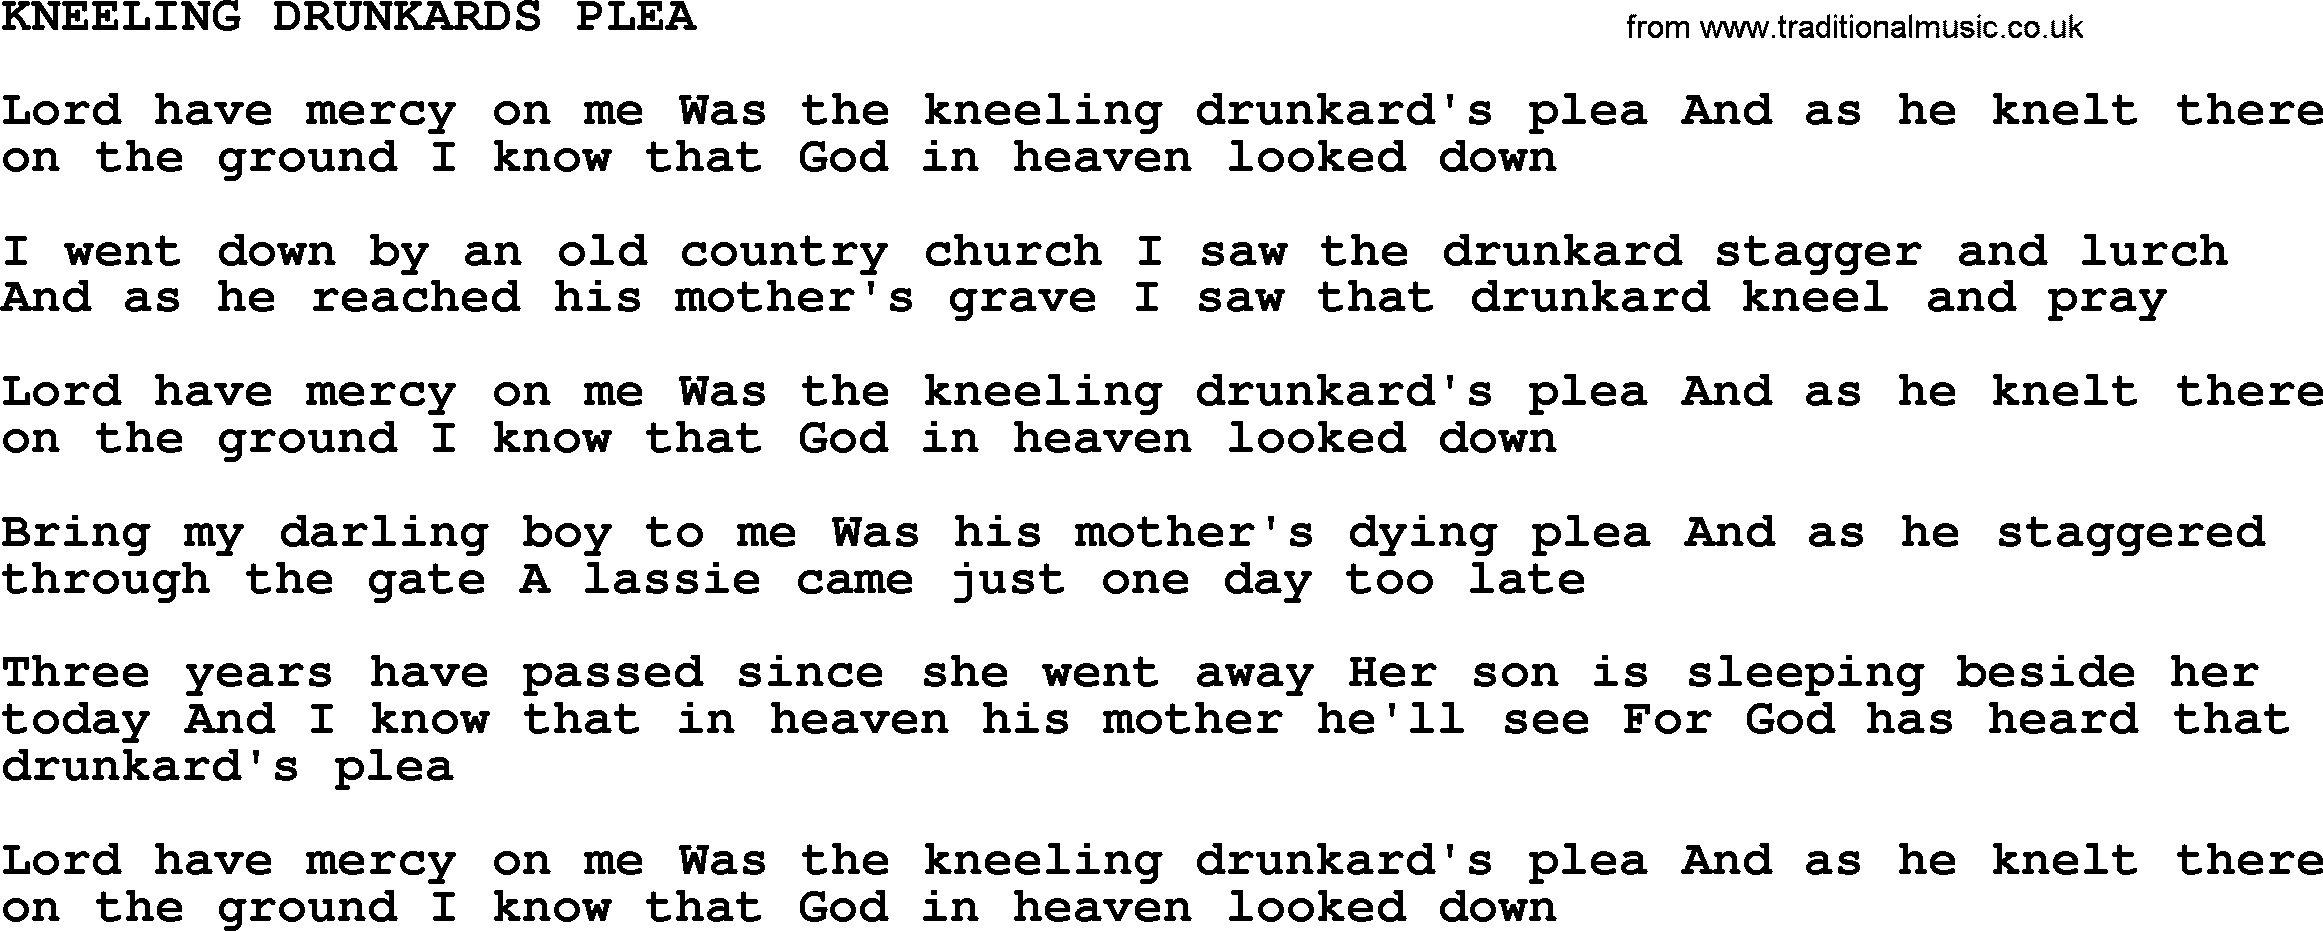 Johnny Cash song Kneeling Drunkards Plea.txt lyrics